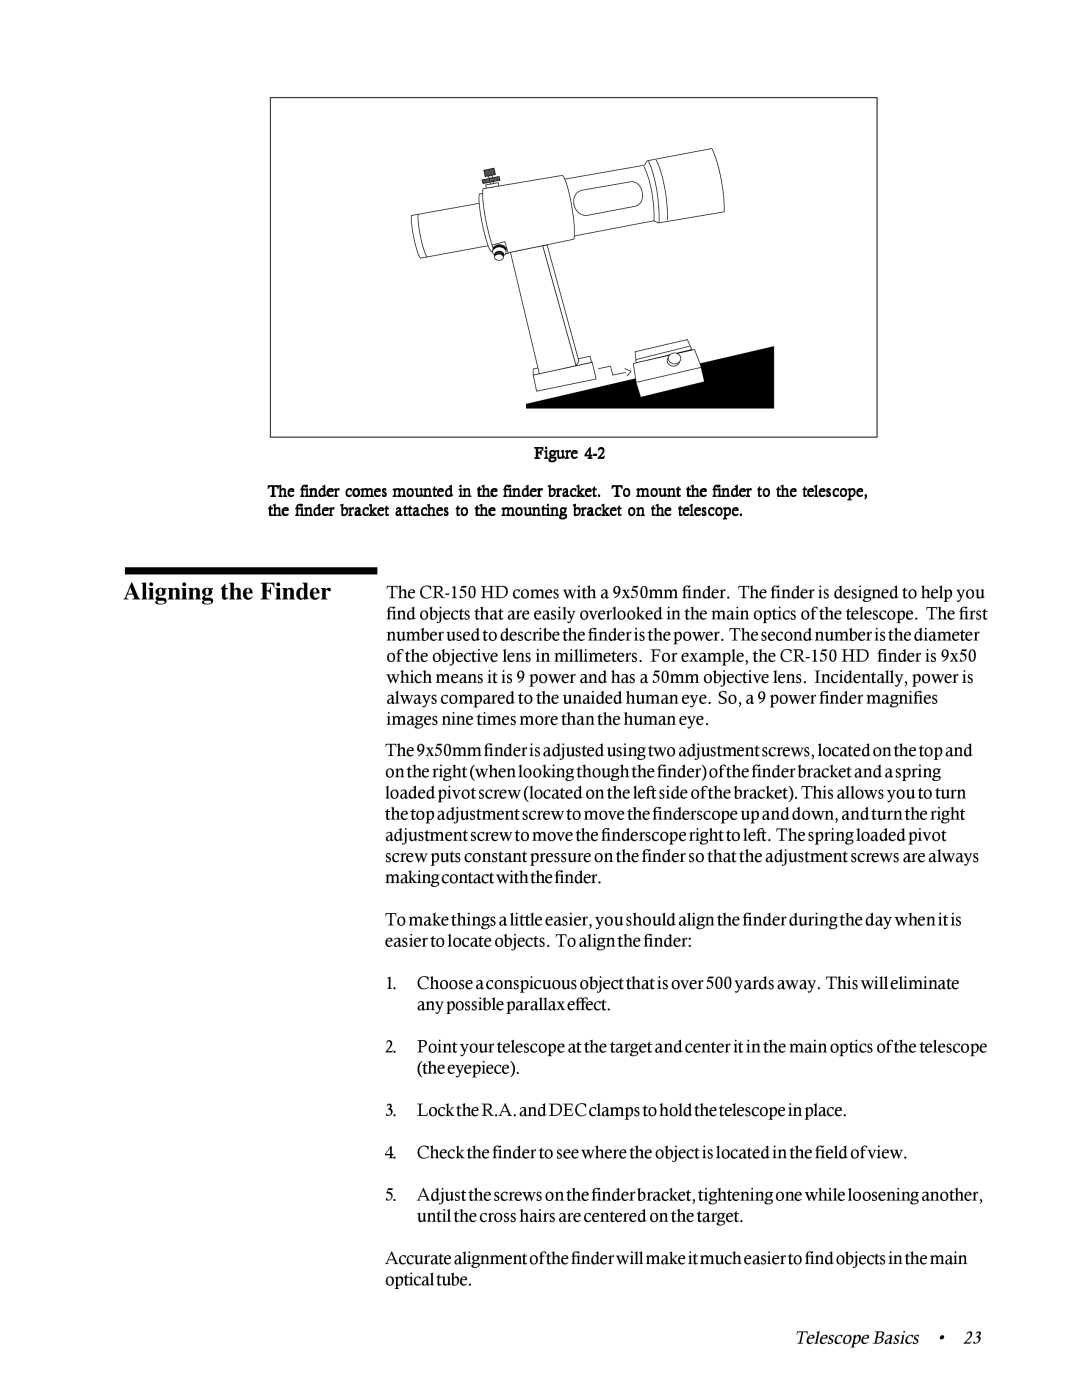 Celestron CR-150 HD instruction manual Aligning the Finder, Telescope Basics 